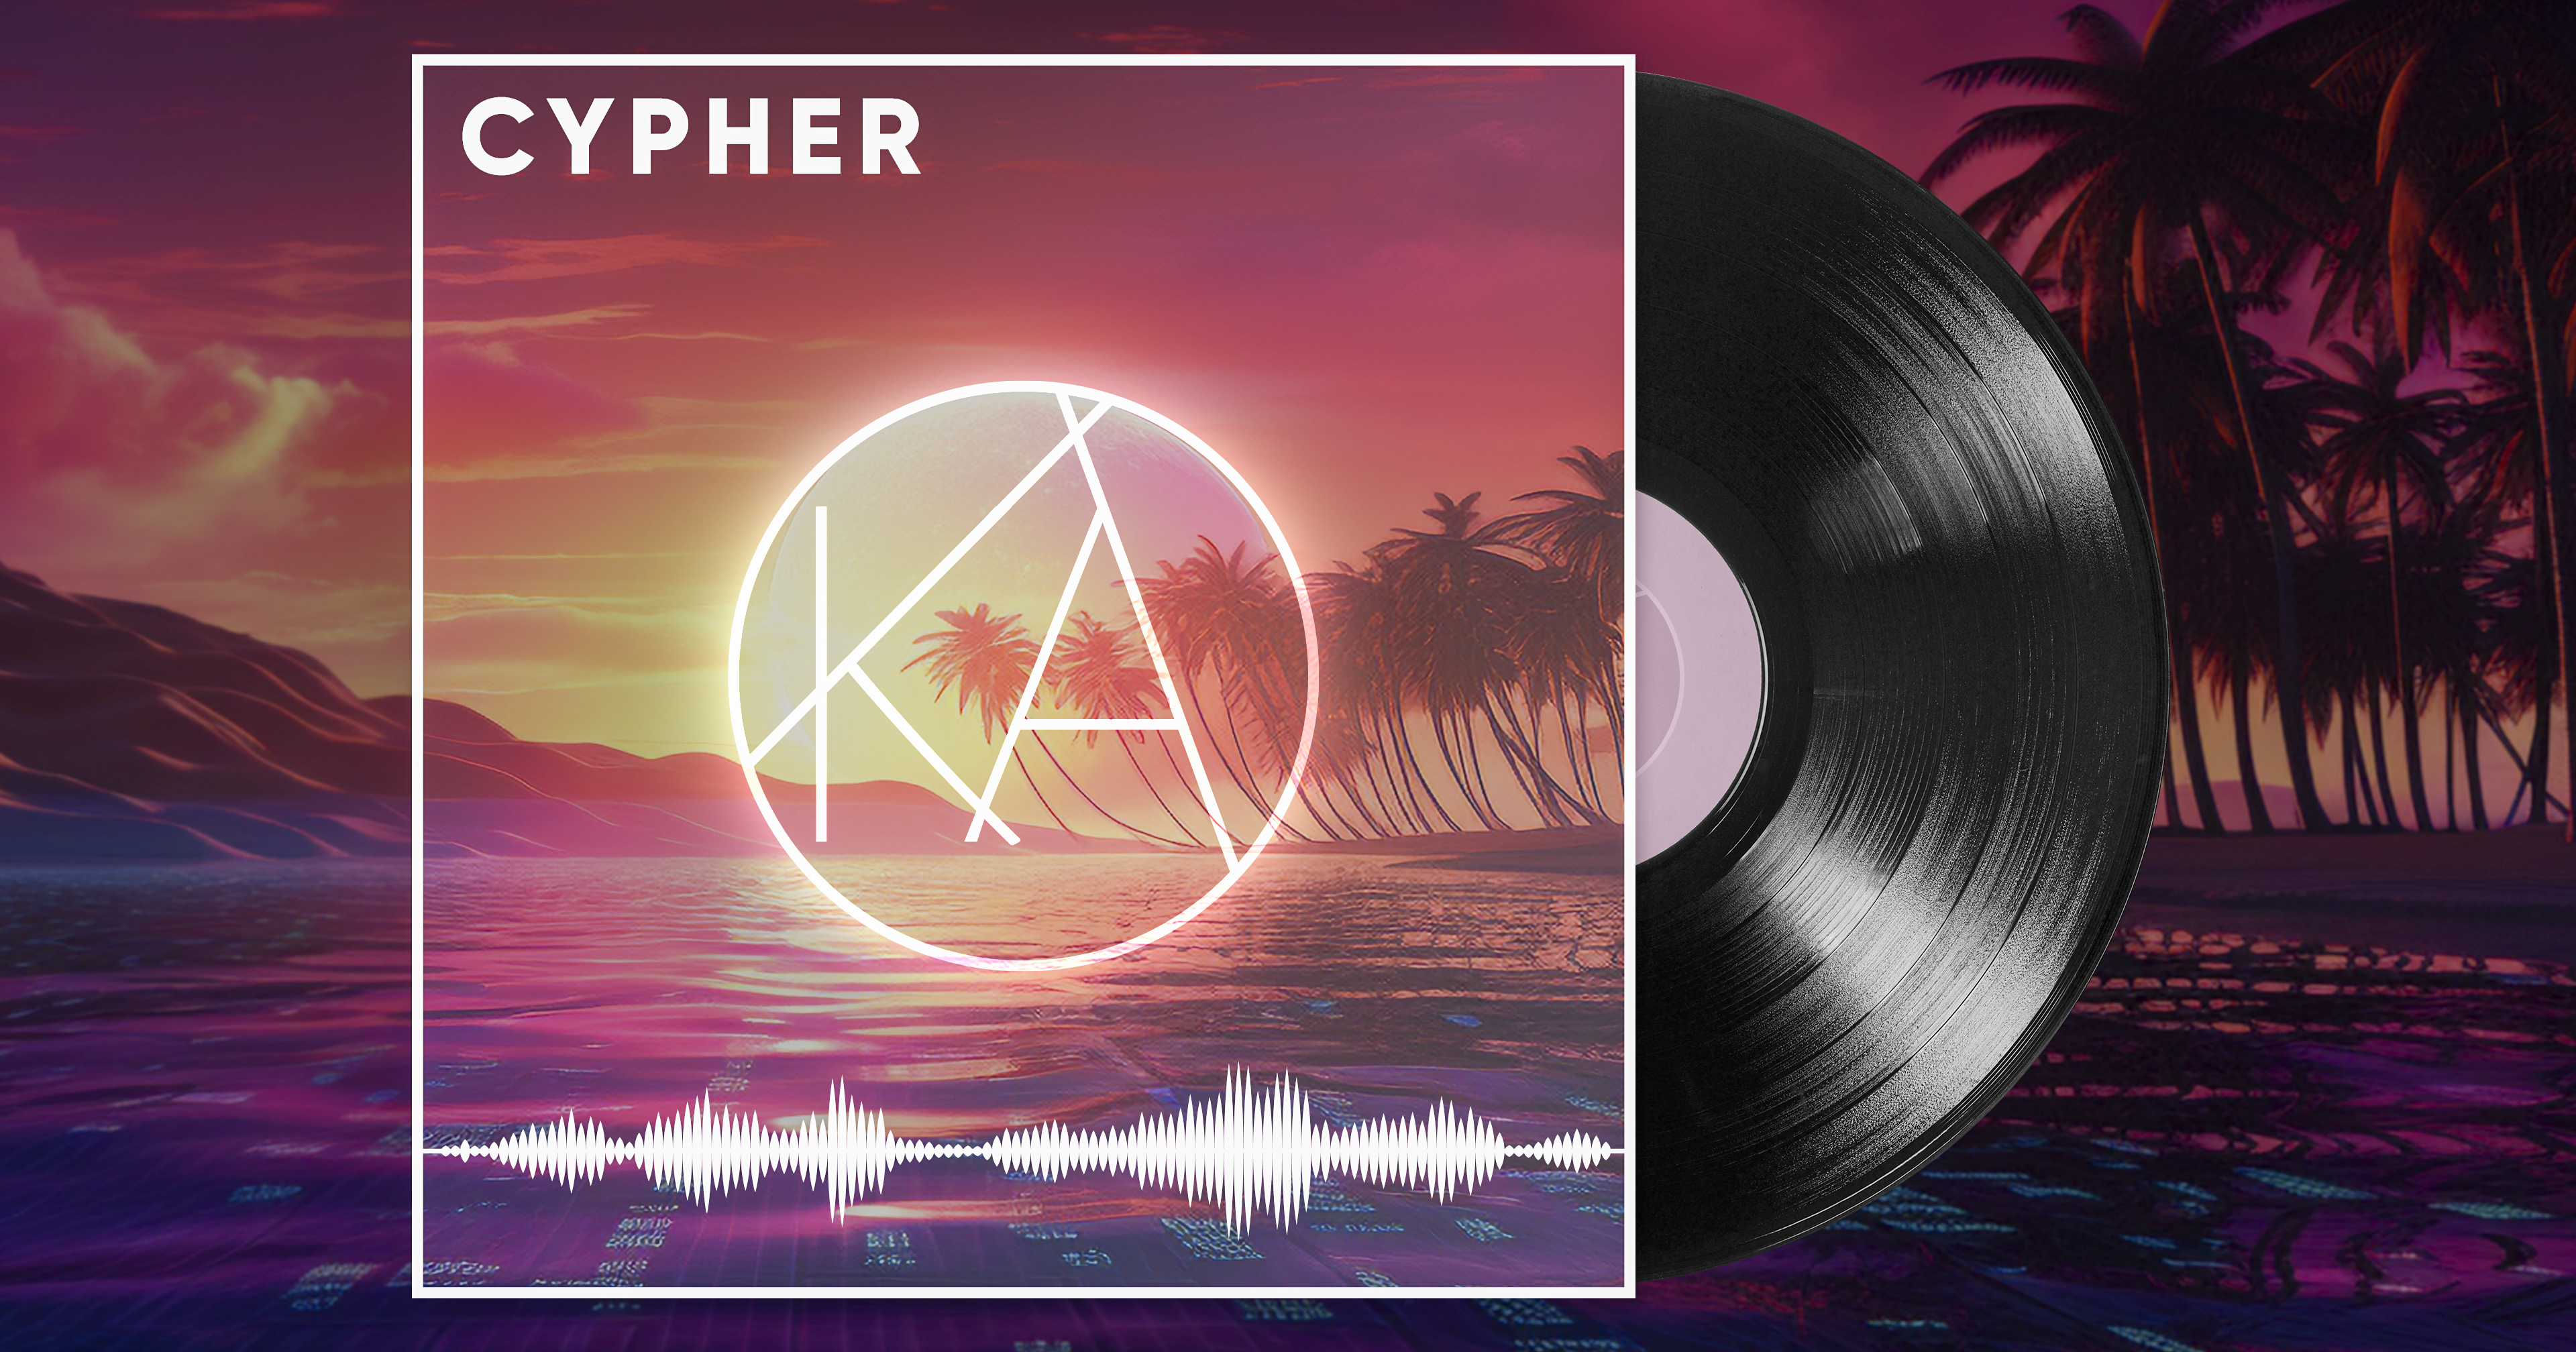 Cypher - A Synth-driven Odyssey through Retro-futuristic Soundscapes